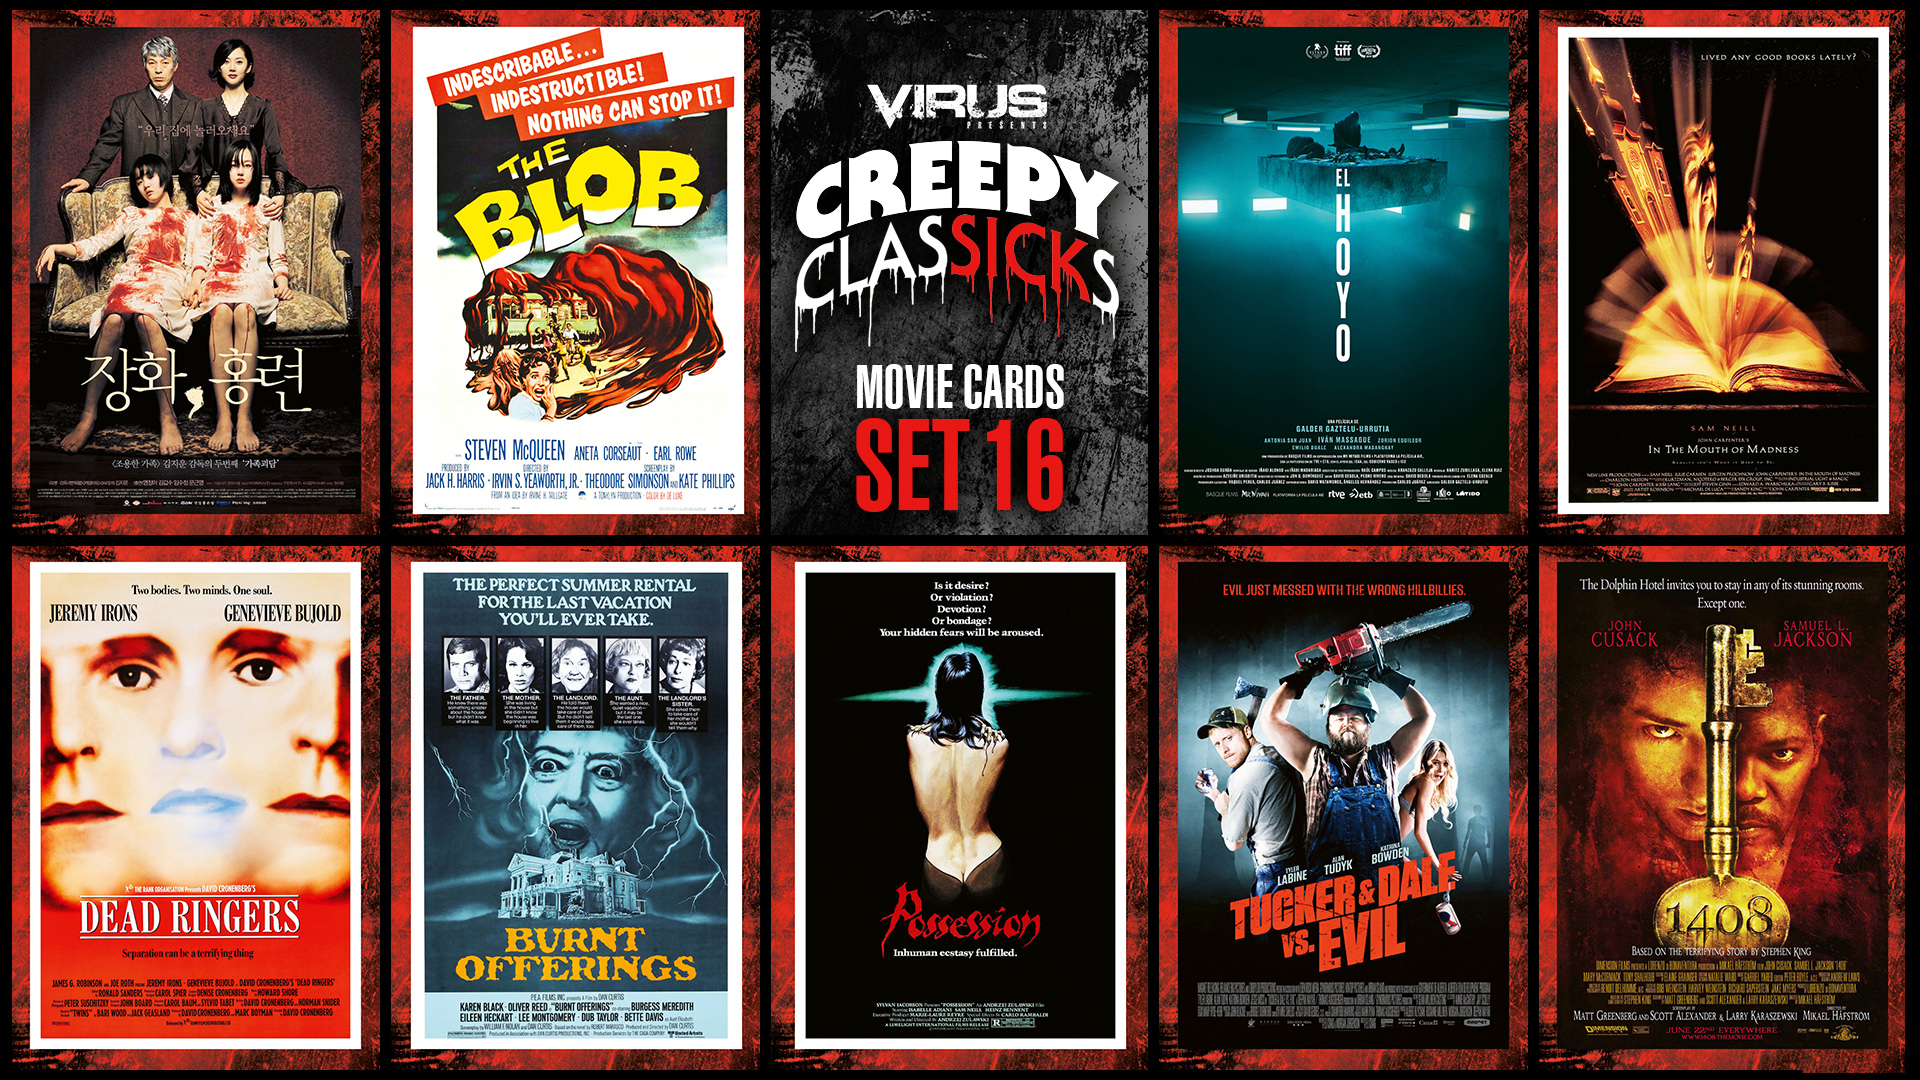 VIRUS Creepy ClasSICKs Movie Cards Set #16